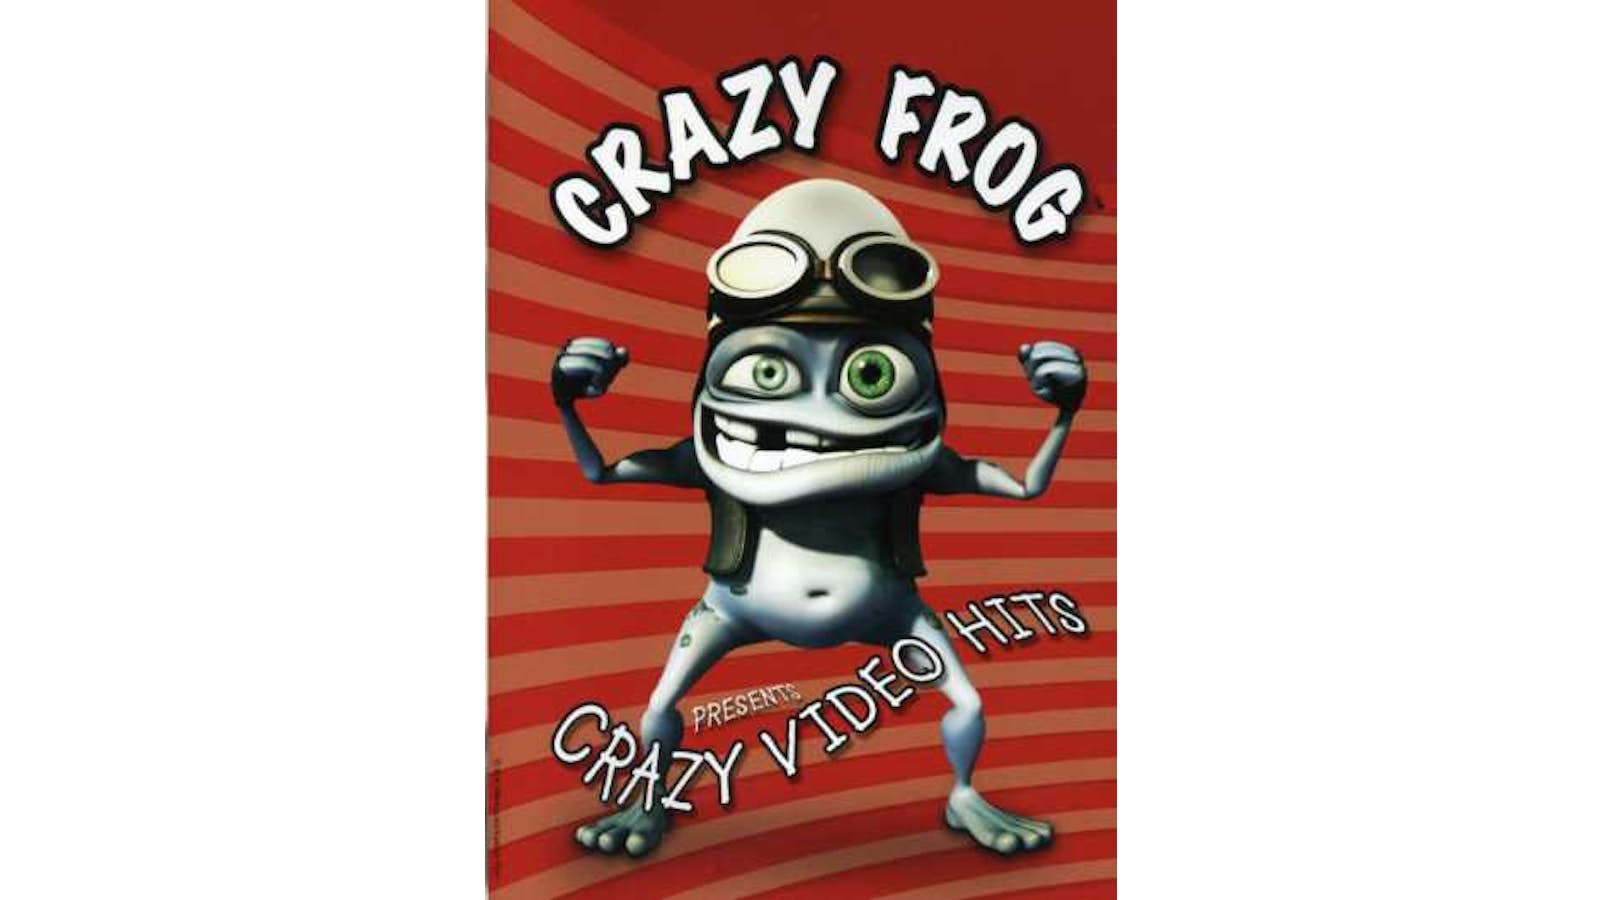  Crazy Frog Presents Crazy Video Hits : Crazy Frog, *: Movies &  TV